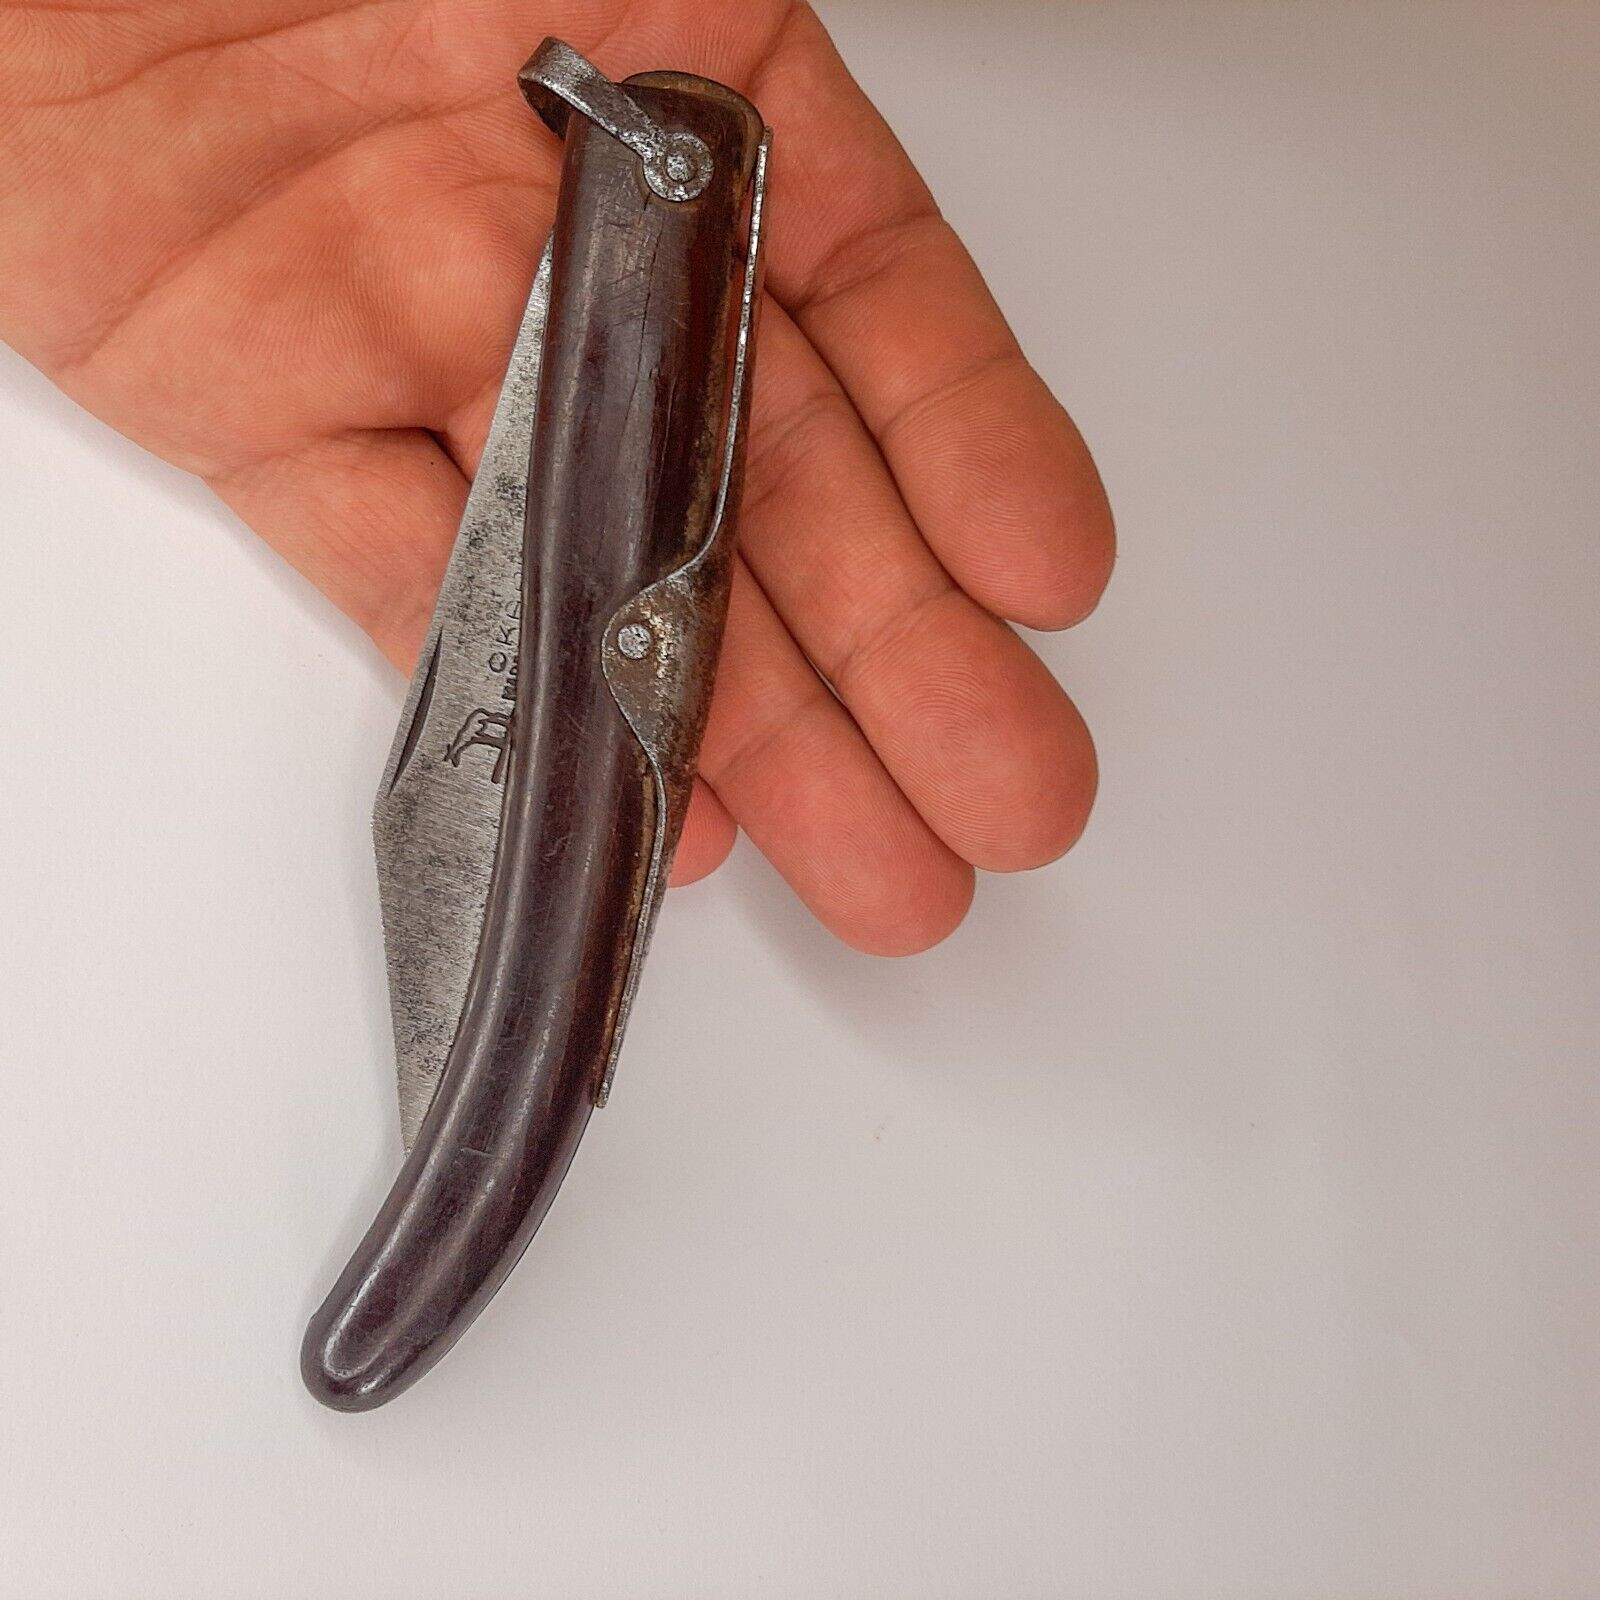 RARE Original Vintage OKAPI German Folding Pocket Knife Made in Germany knives